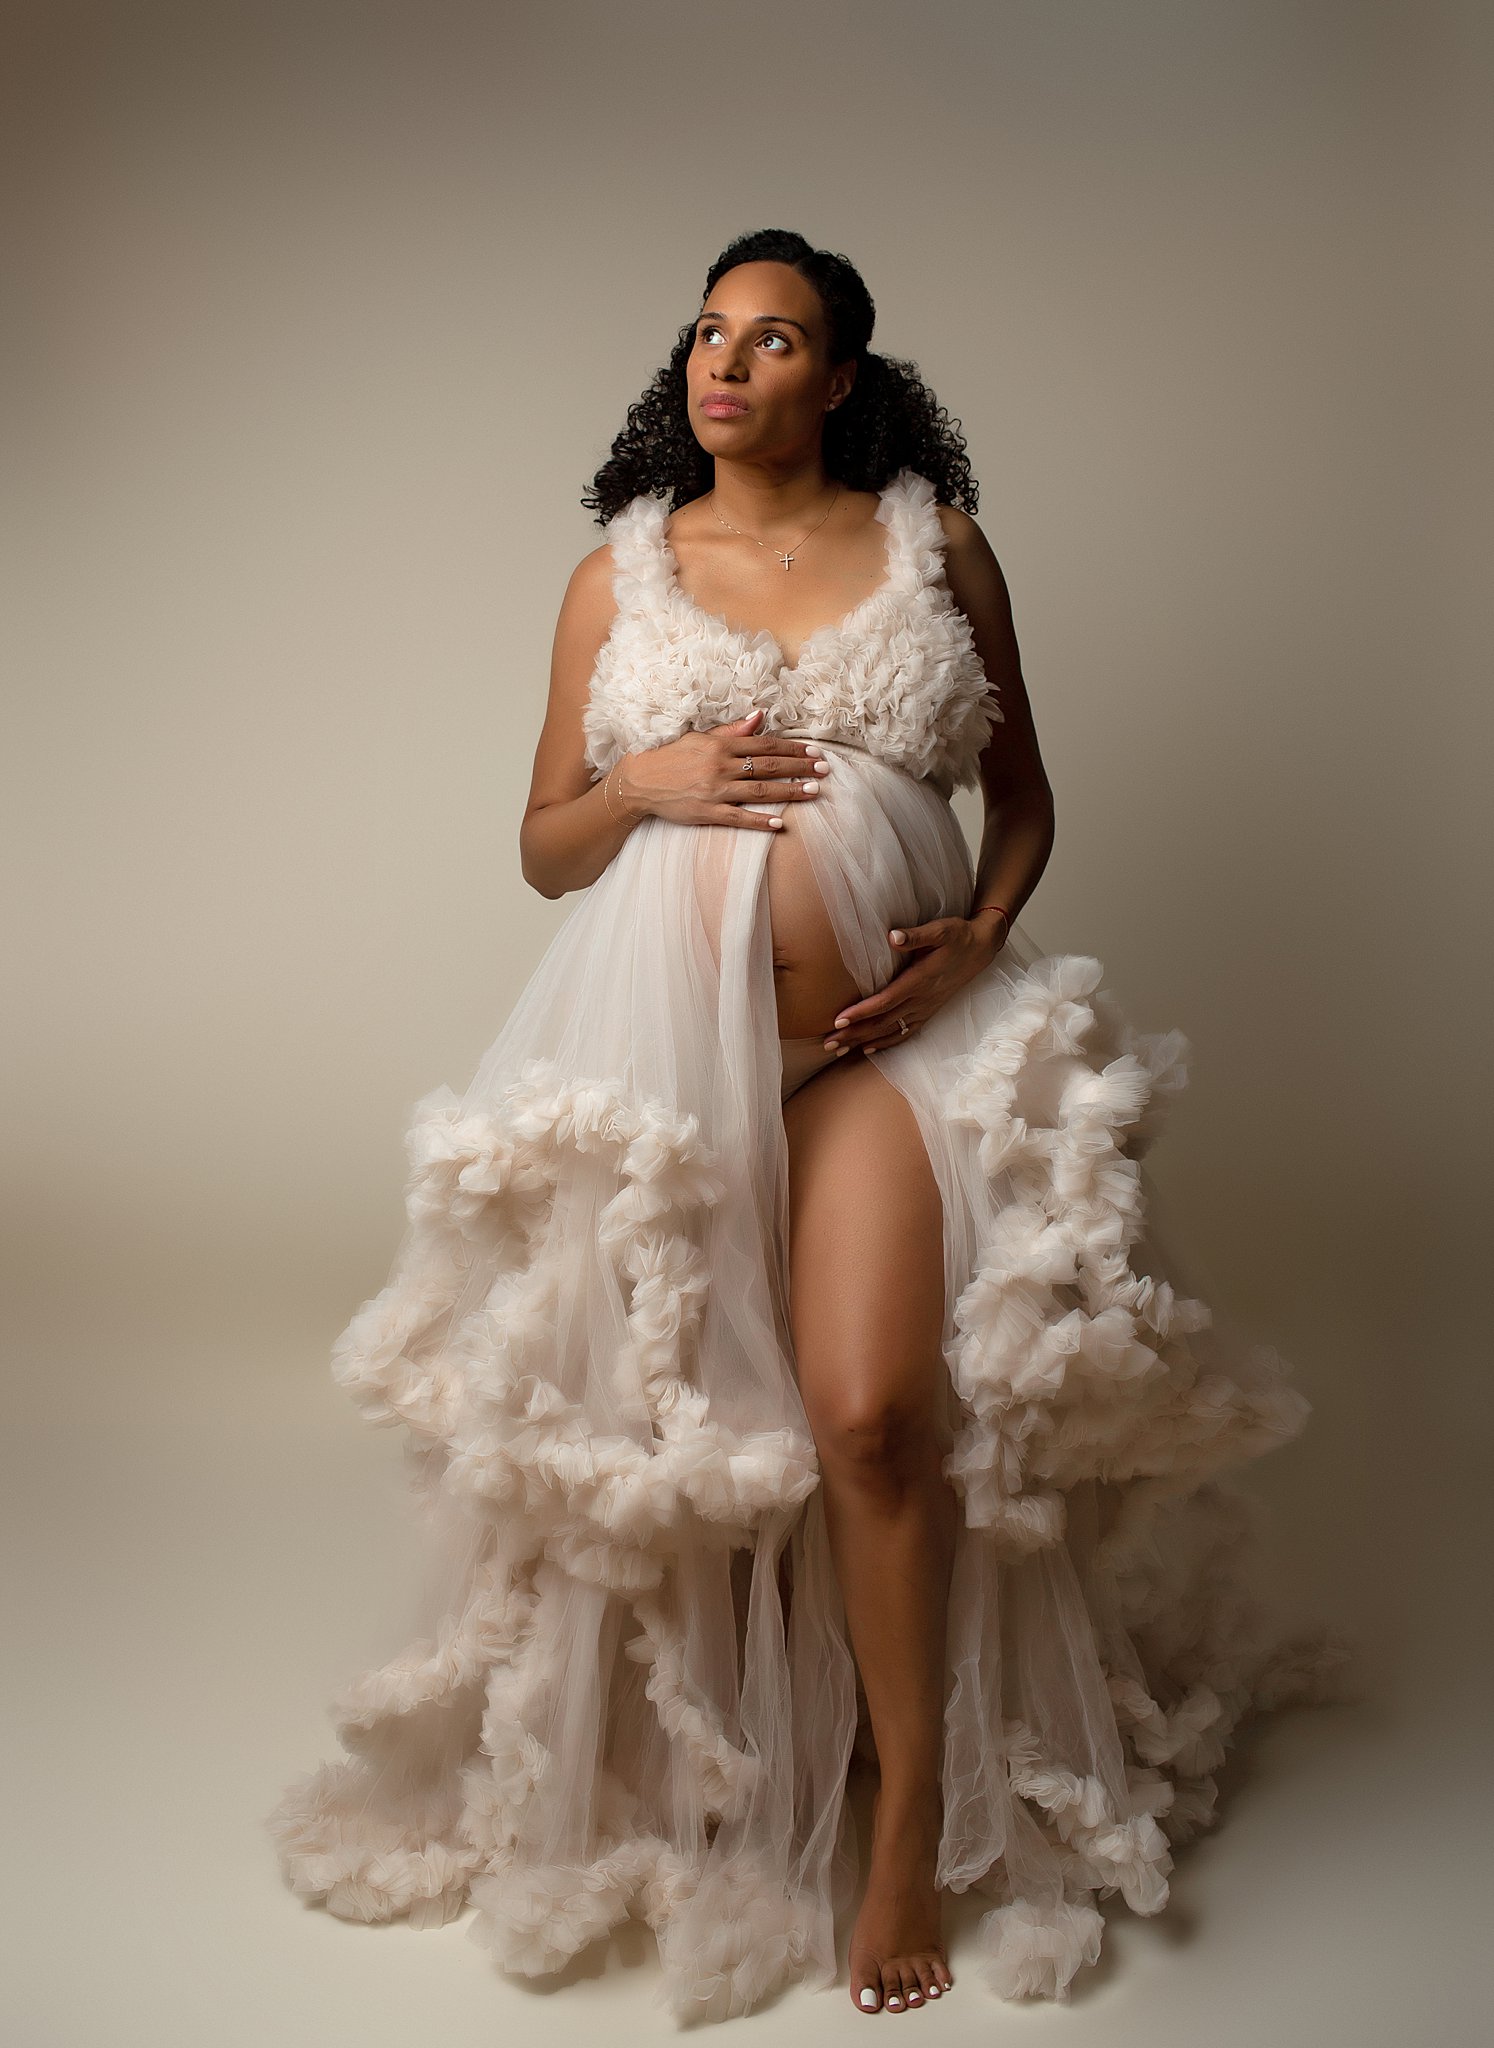 Orlando maternity photographer with client closet